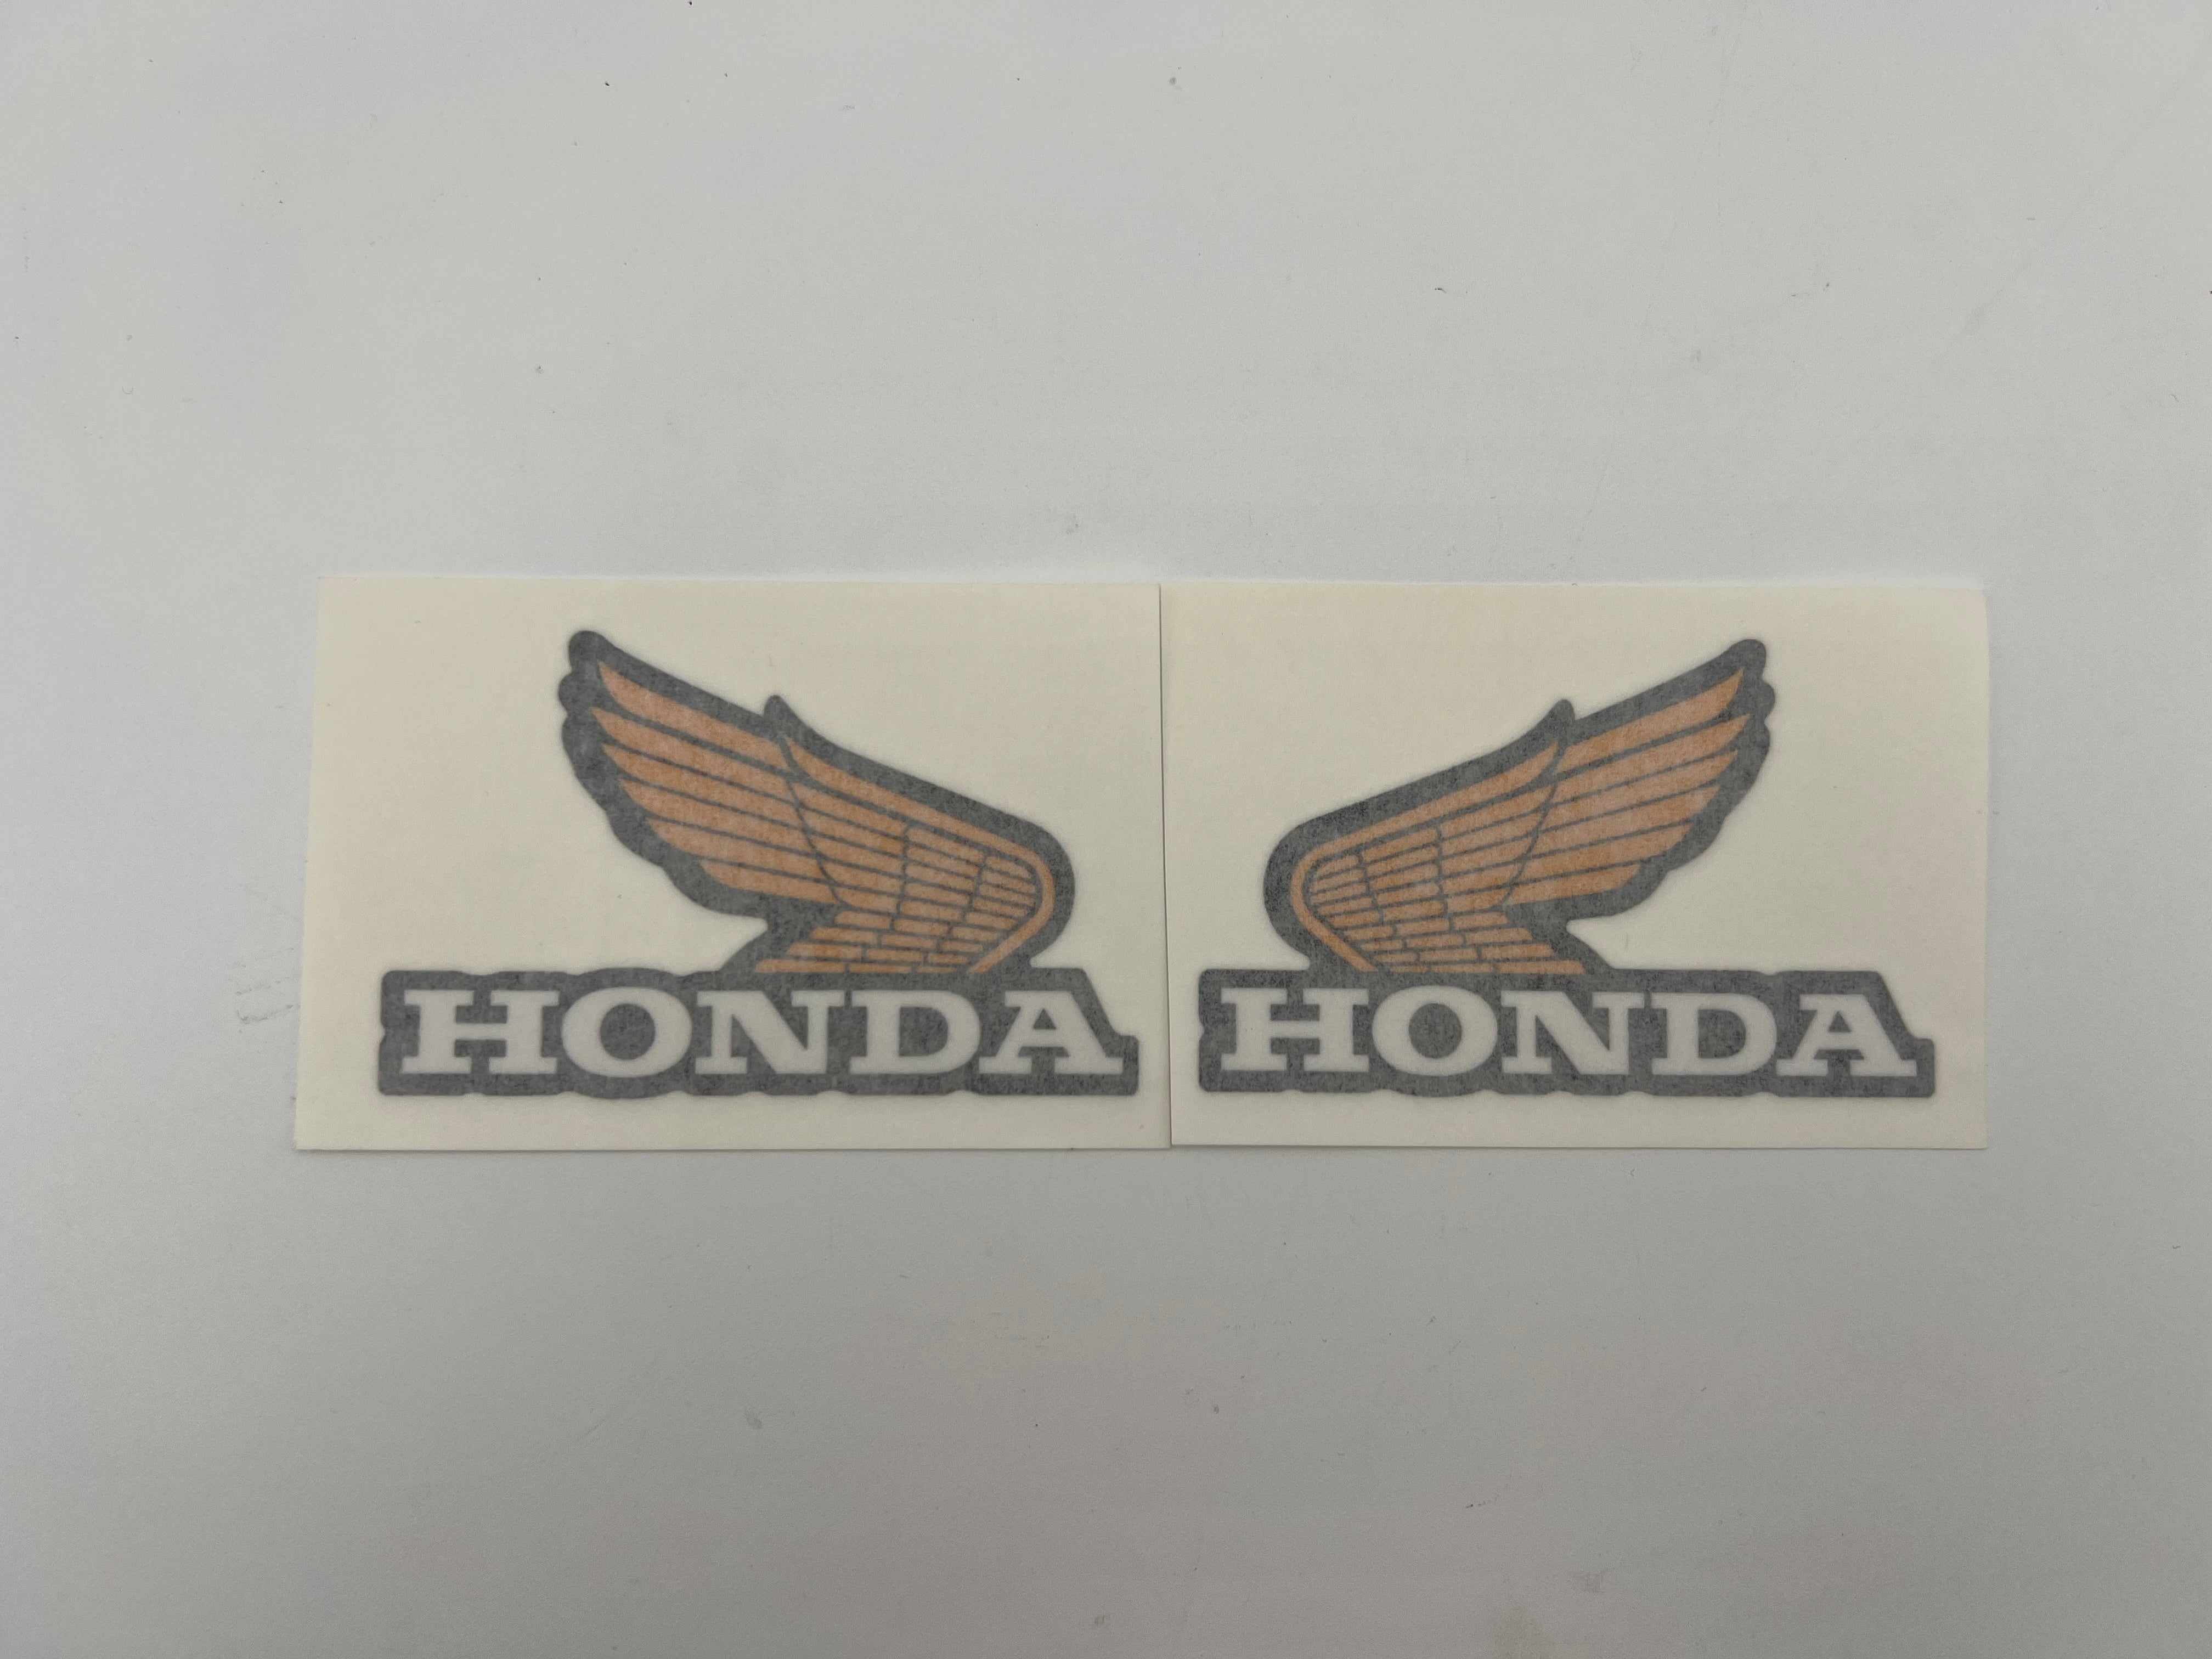 Honda Z50R Wing Tank Decals